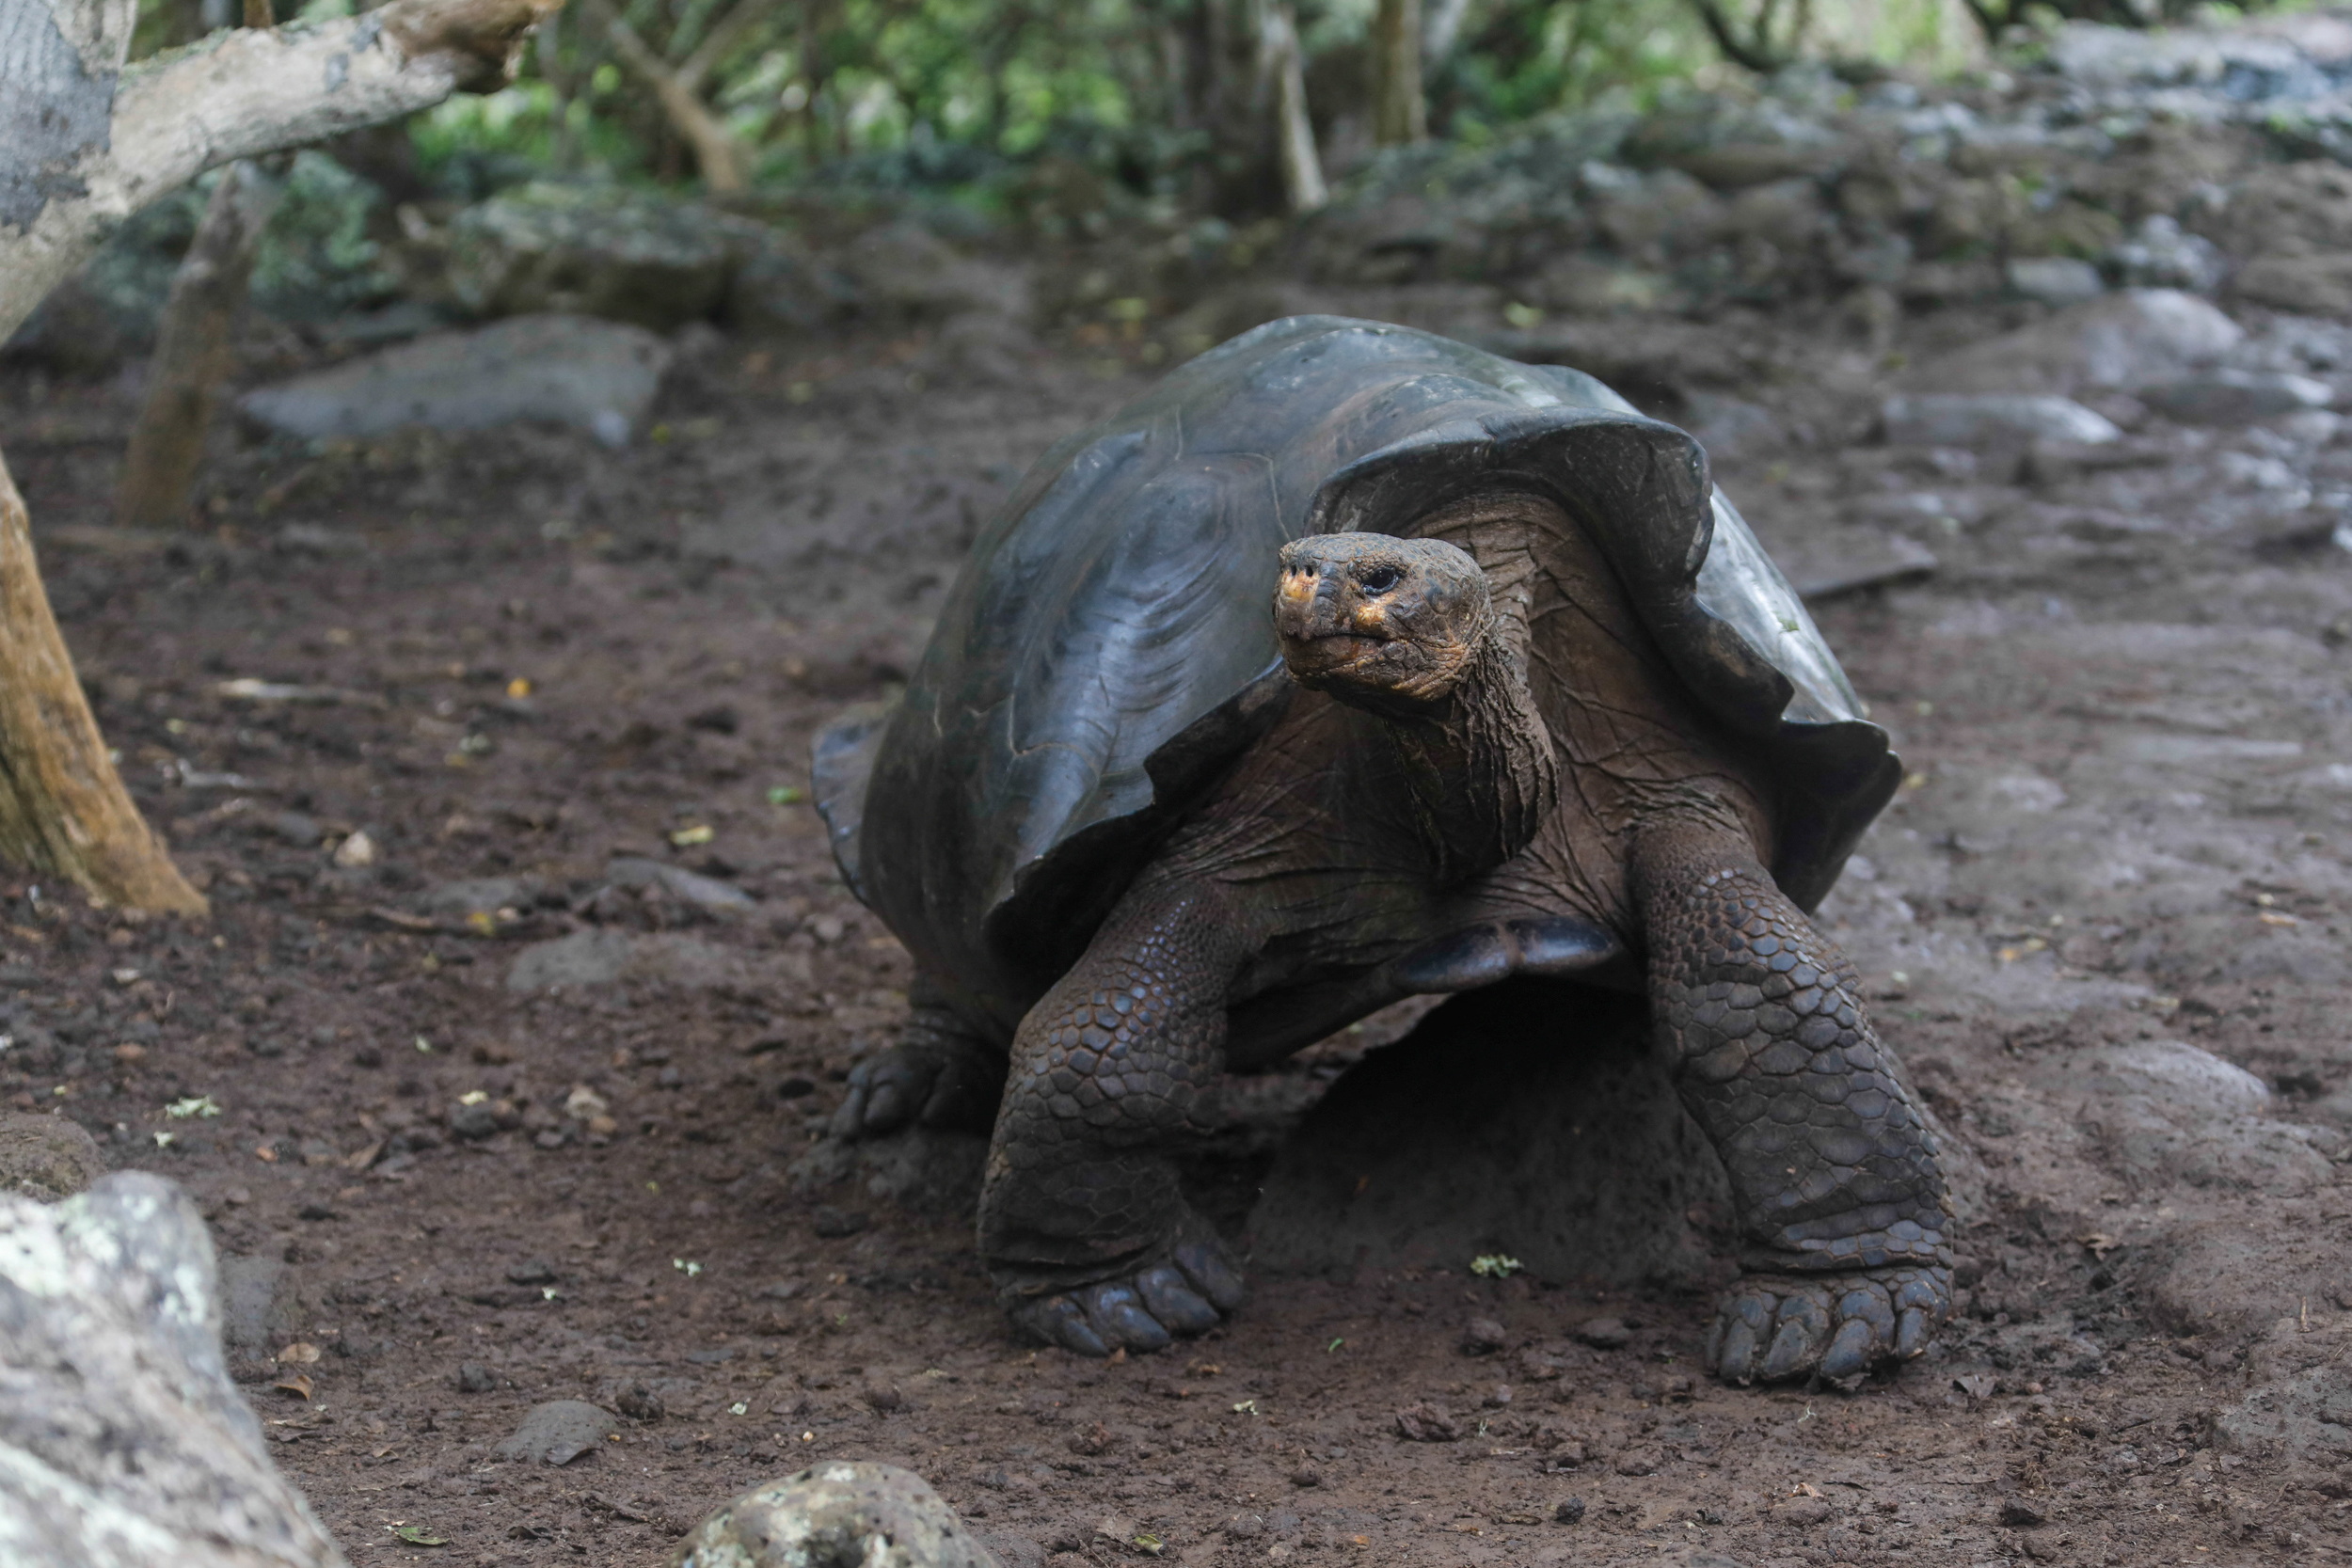 Galapagos tortoises belong to new species -nat'l park | Reuters